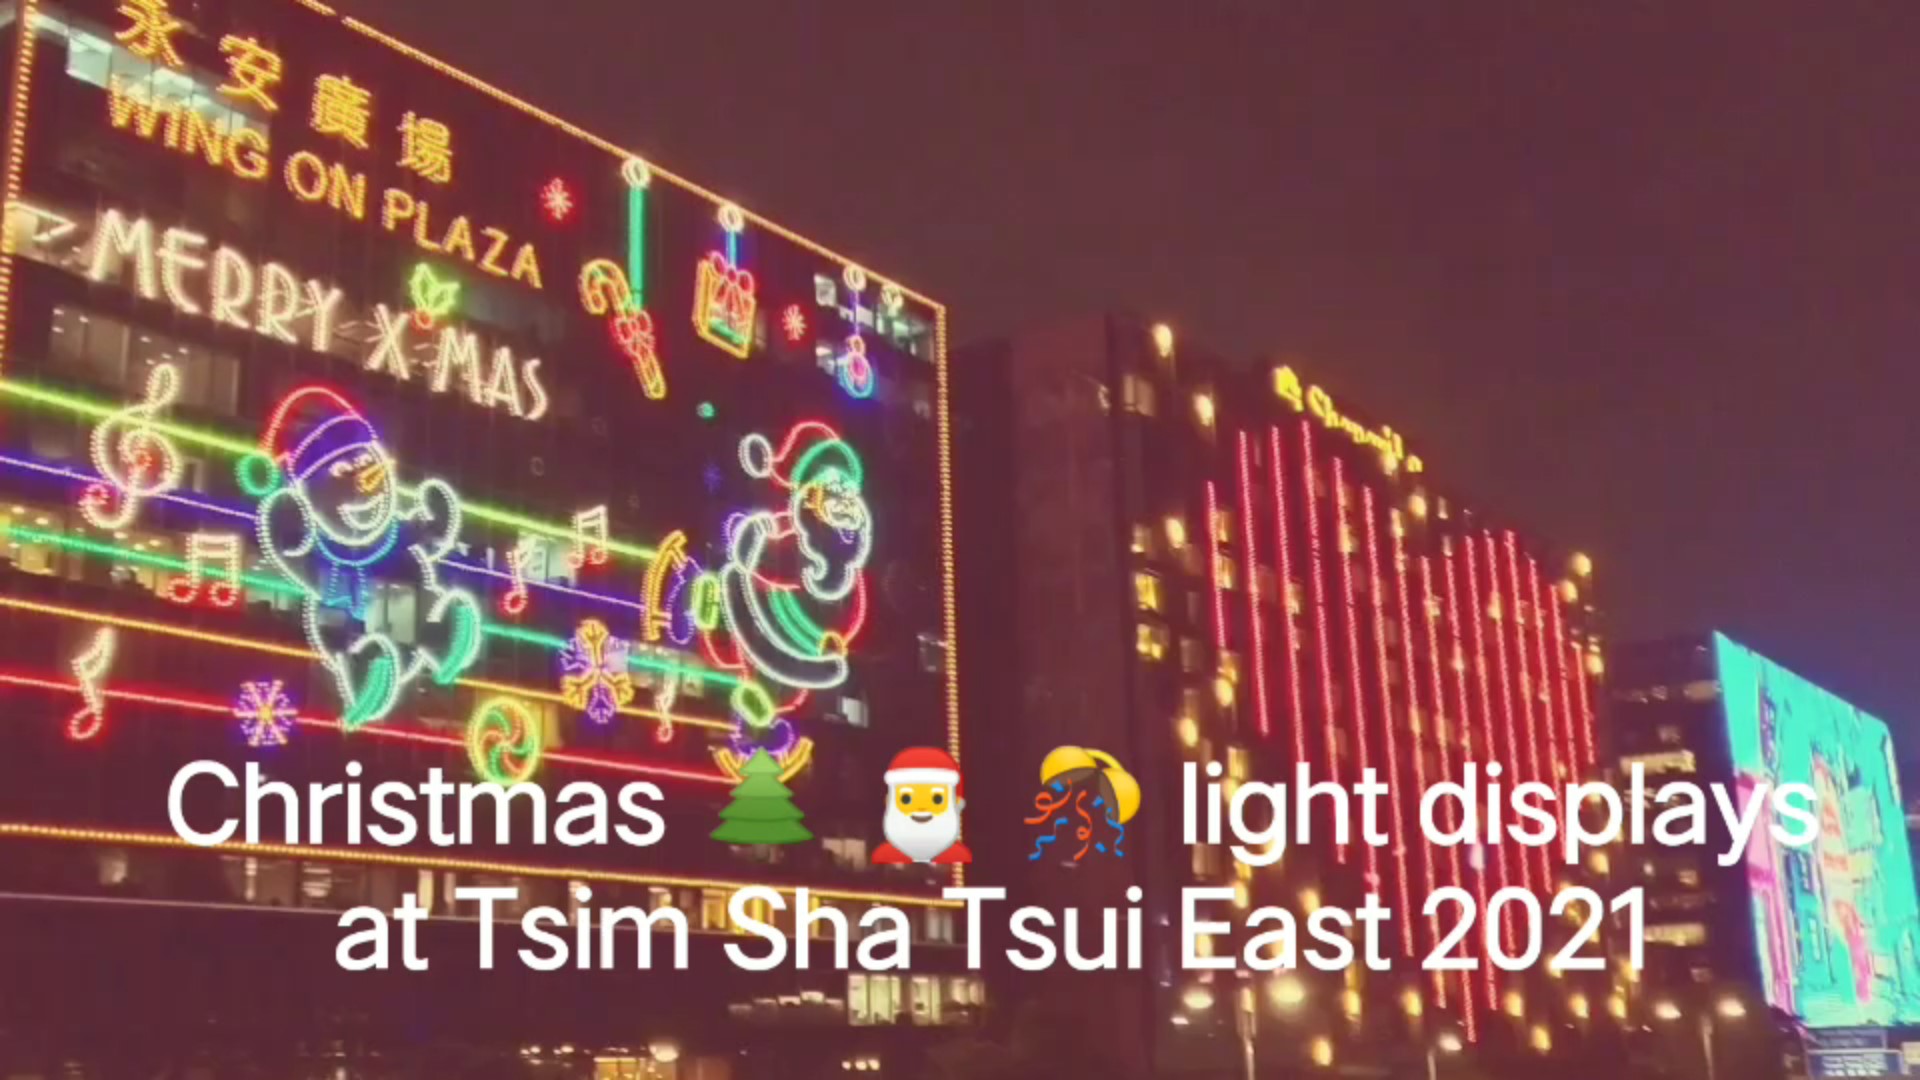 Frank’s “Christmas light displays at Tsim Sha Tsui East 2021” snapshots video